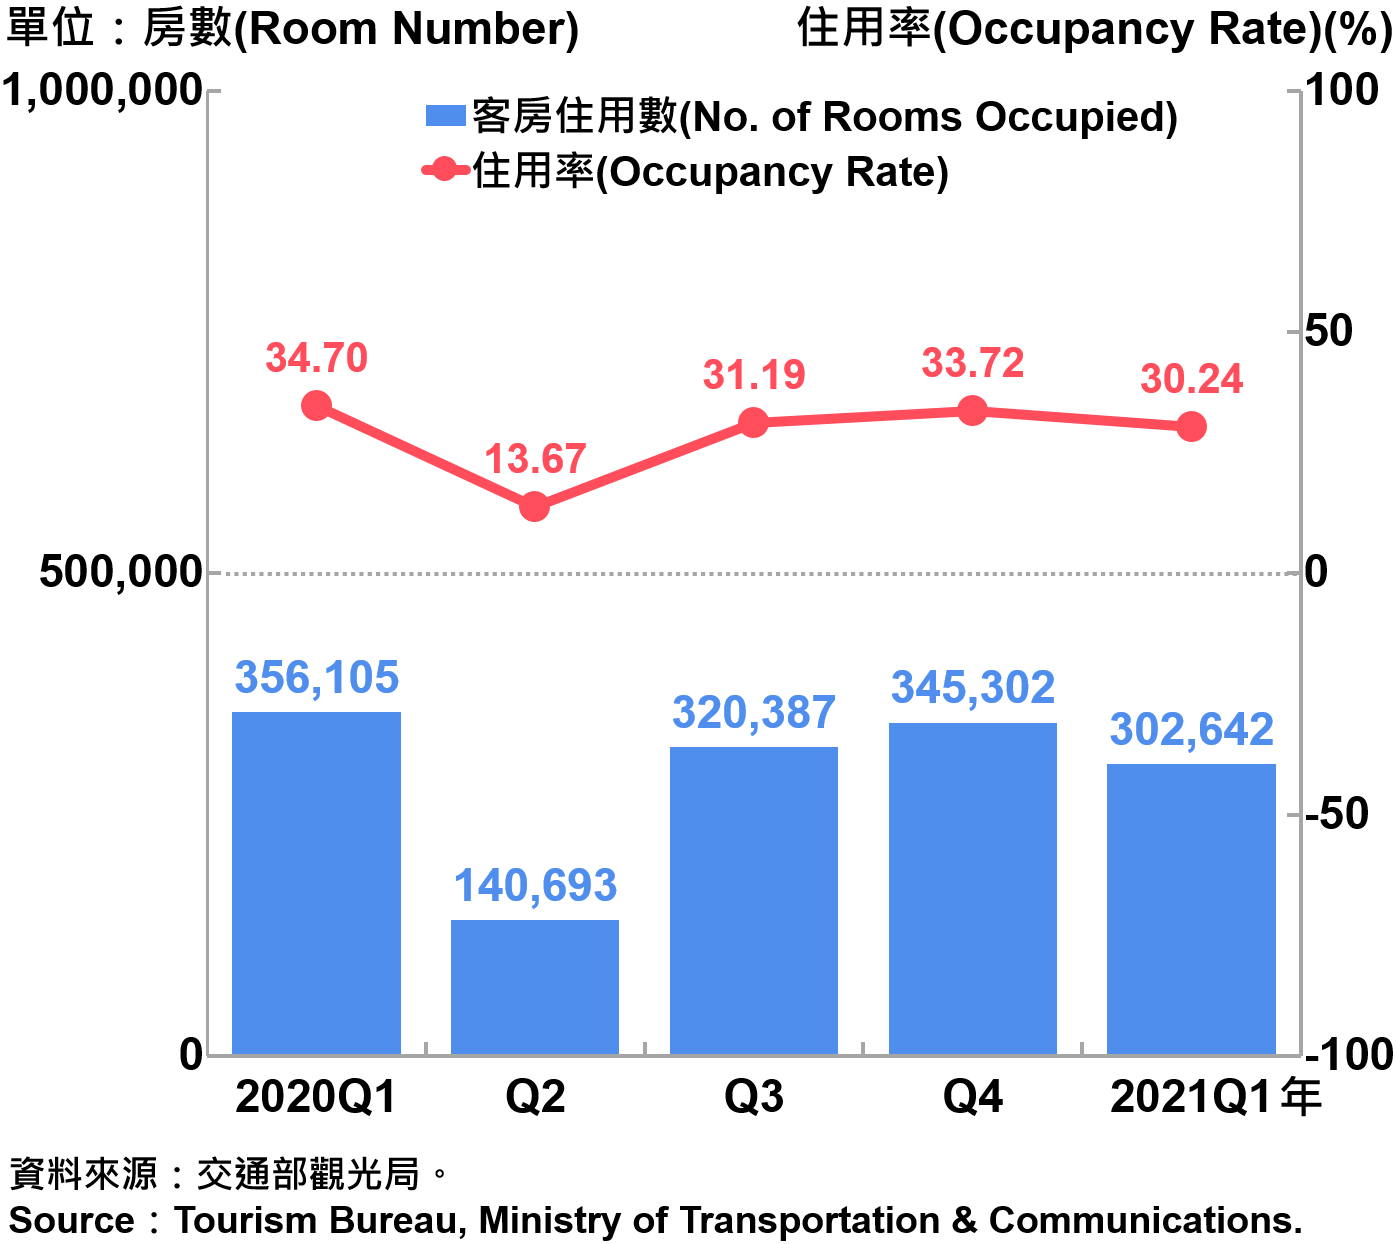 臺北市觀光旅館客房住用率統計—2021Q1 Occupancy Rate on Tourist Hotel Operations in Taipei City—2021Q1